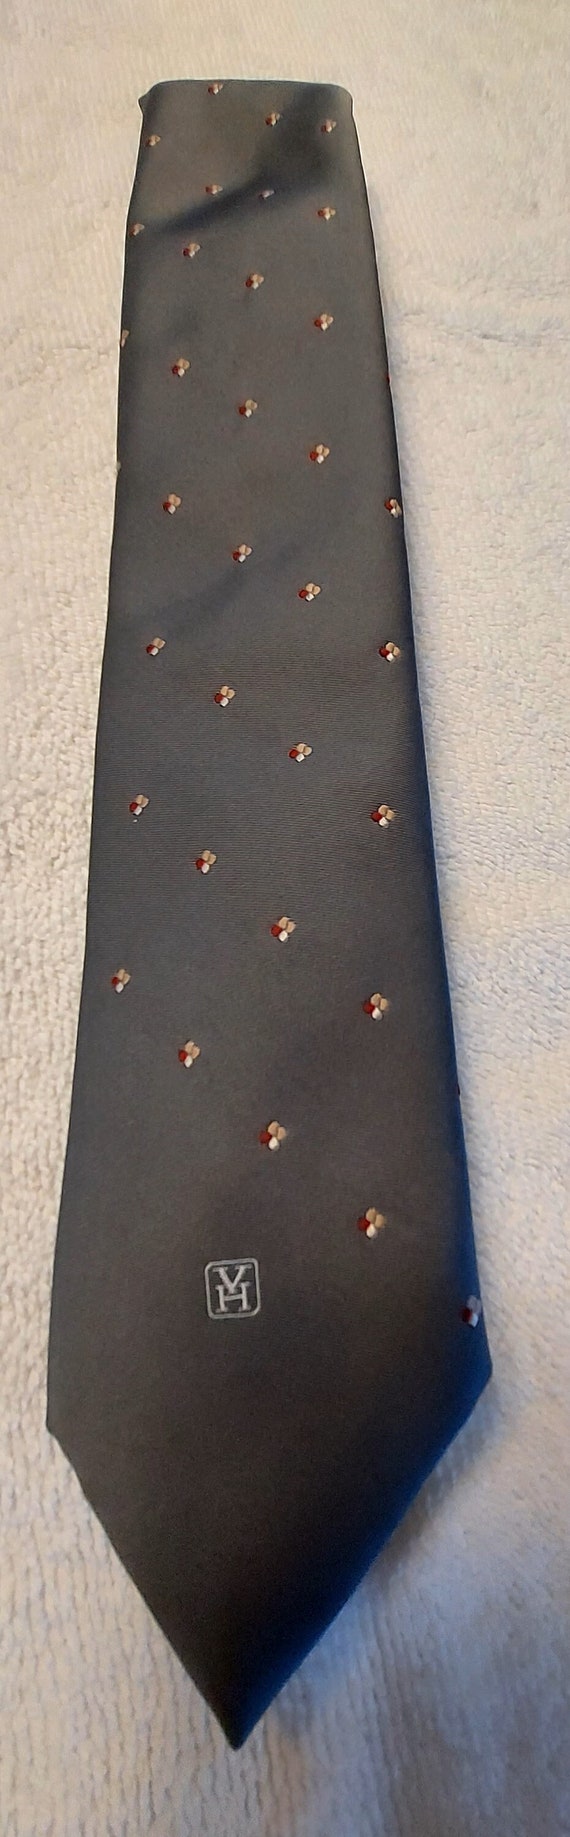 Rare Find Vintage Van Heusen Quality Neckties Lot 